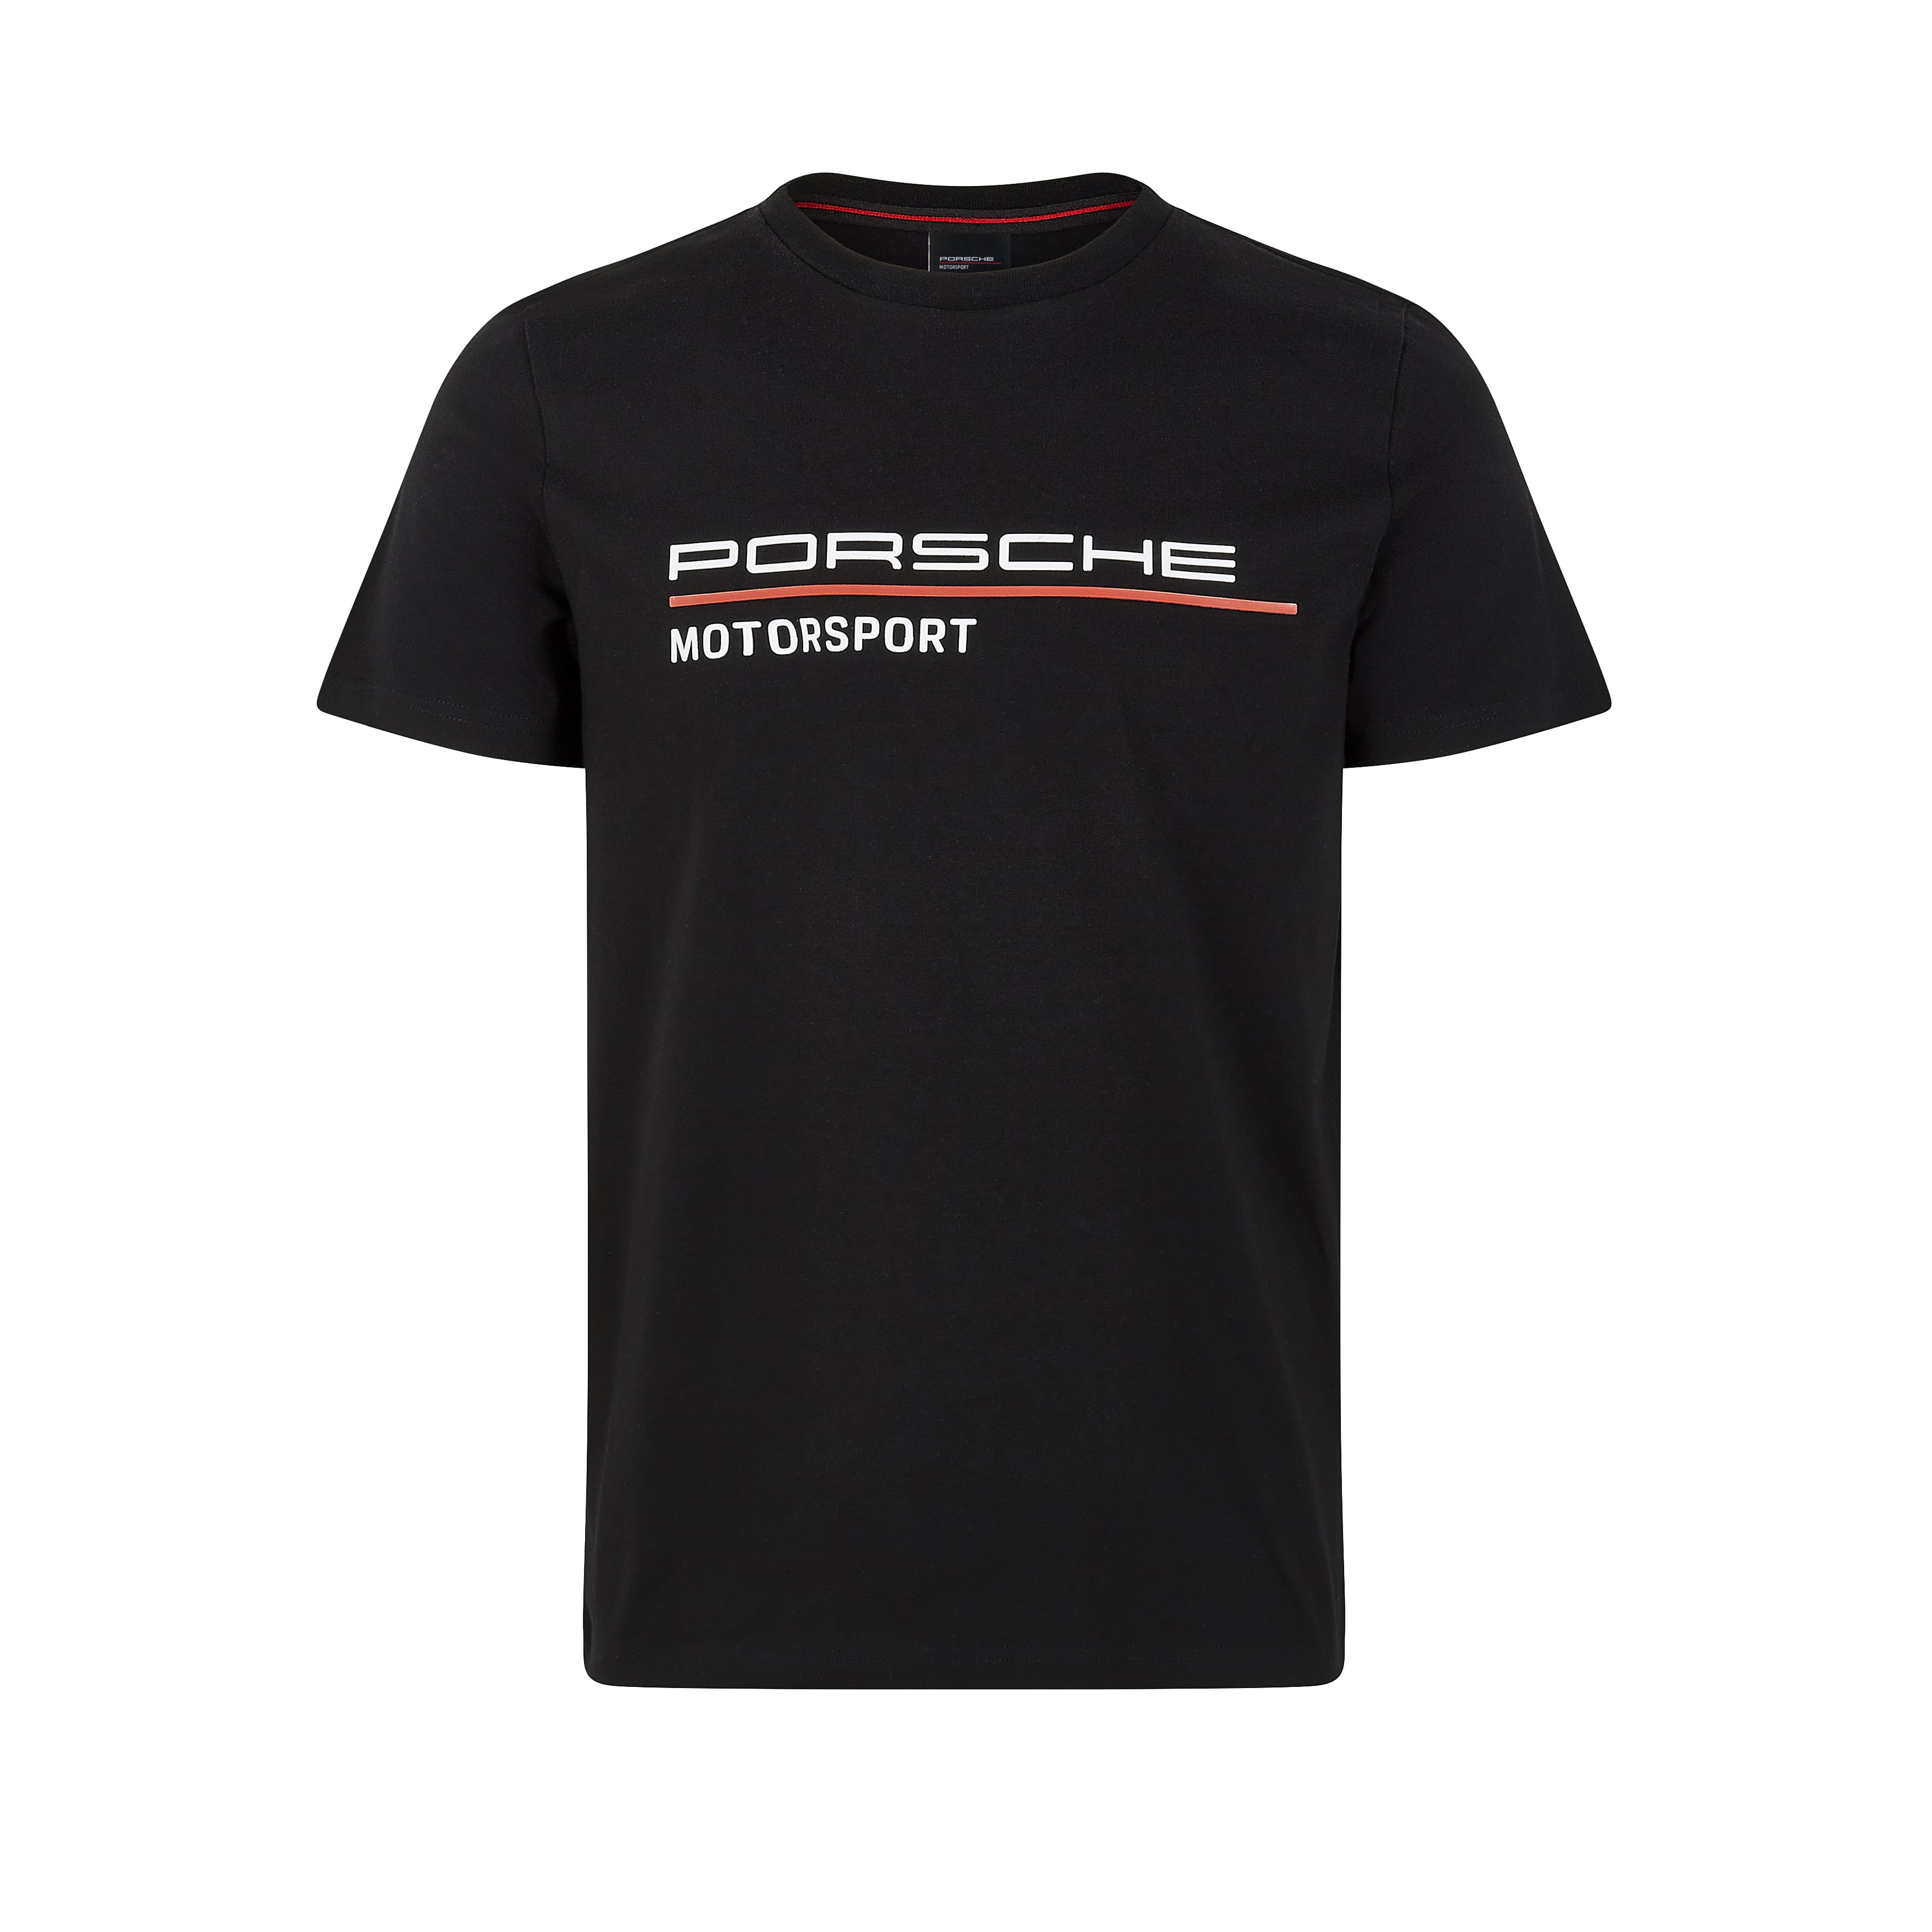 Porsche - Porsche Motorsport Men's Black T-Shirt (S) - Walmart.com ...